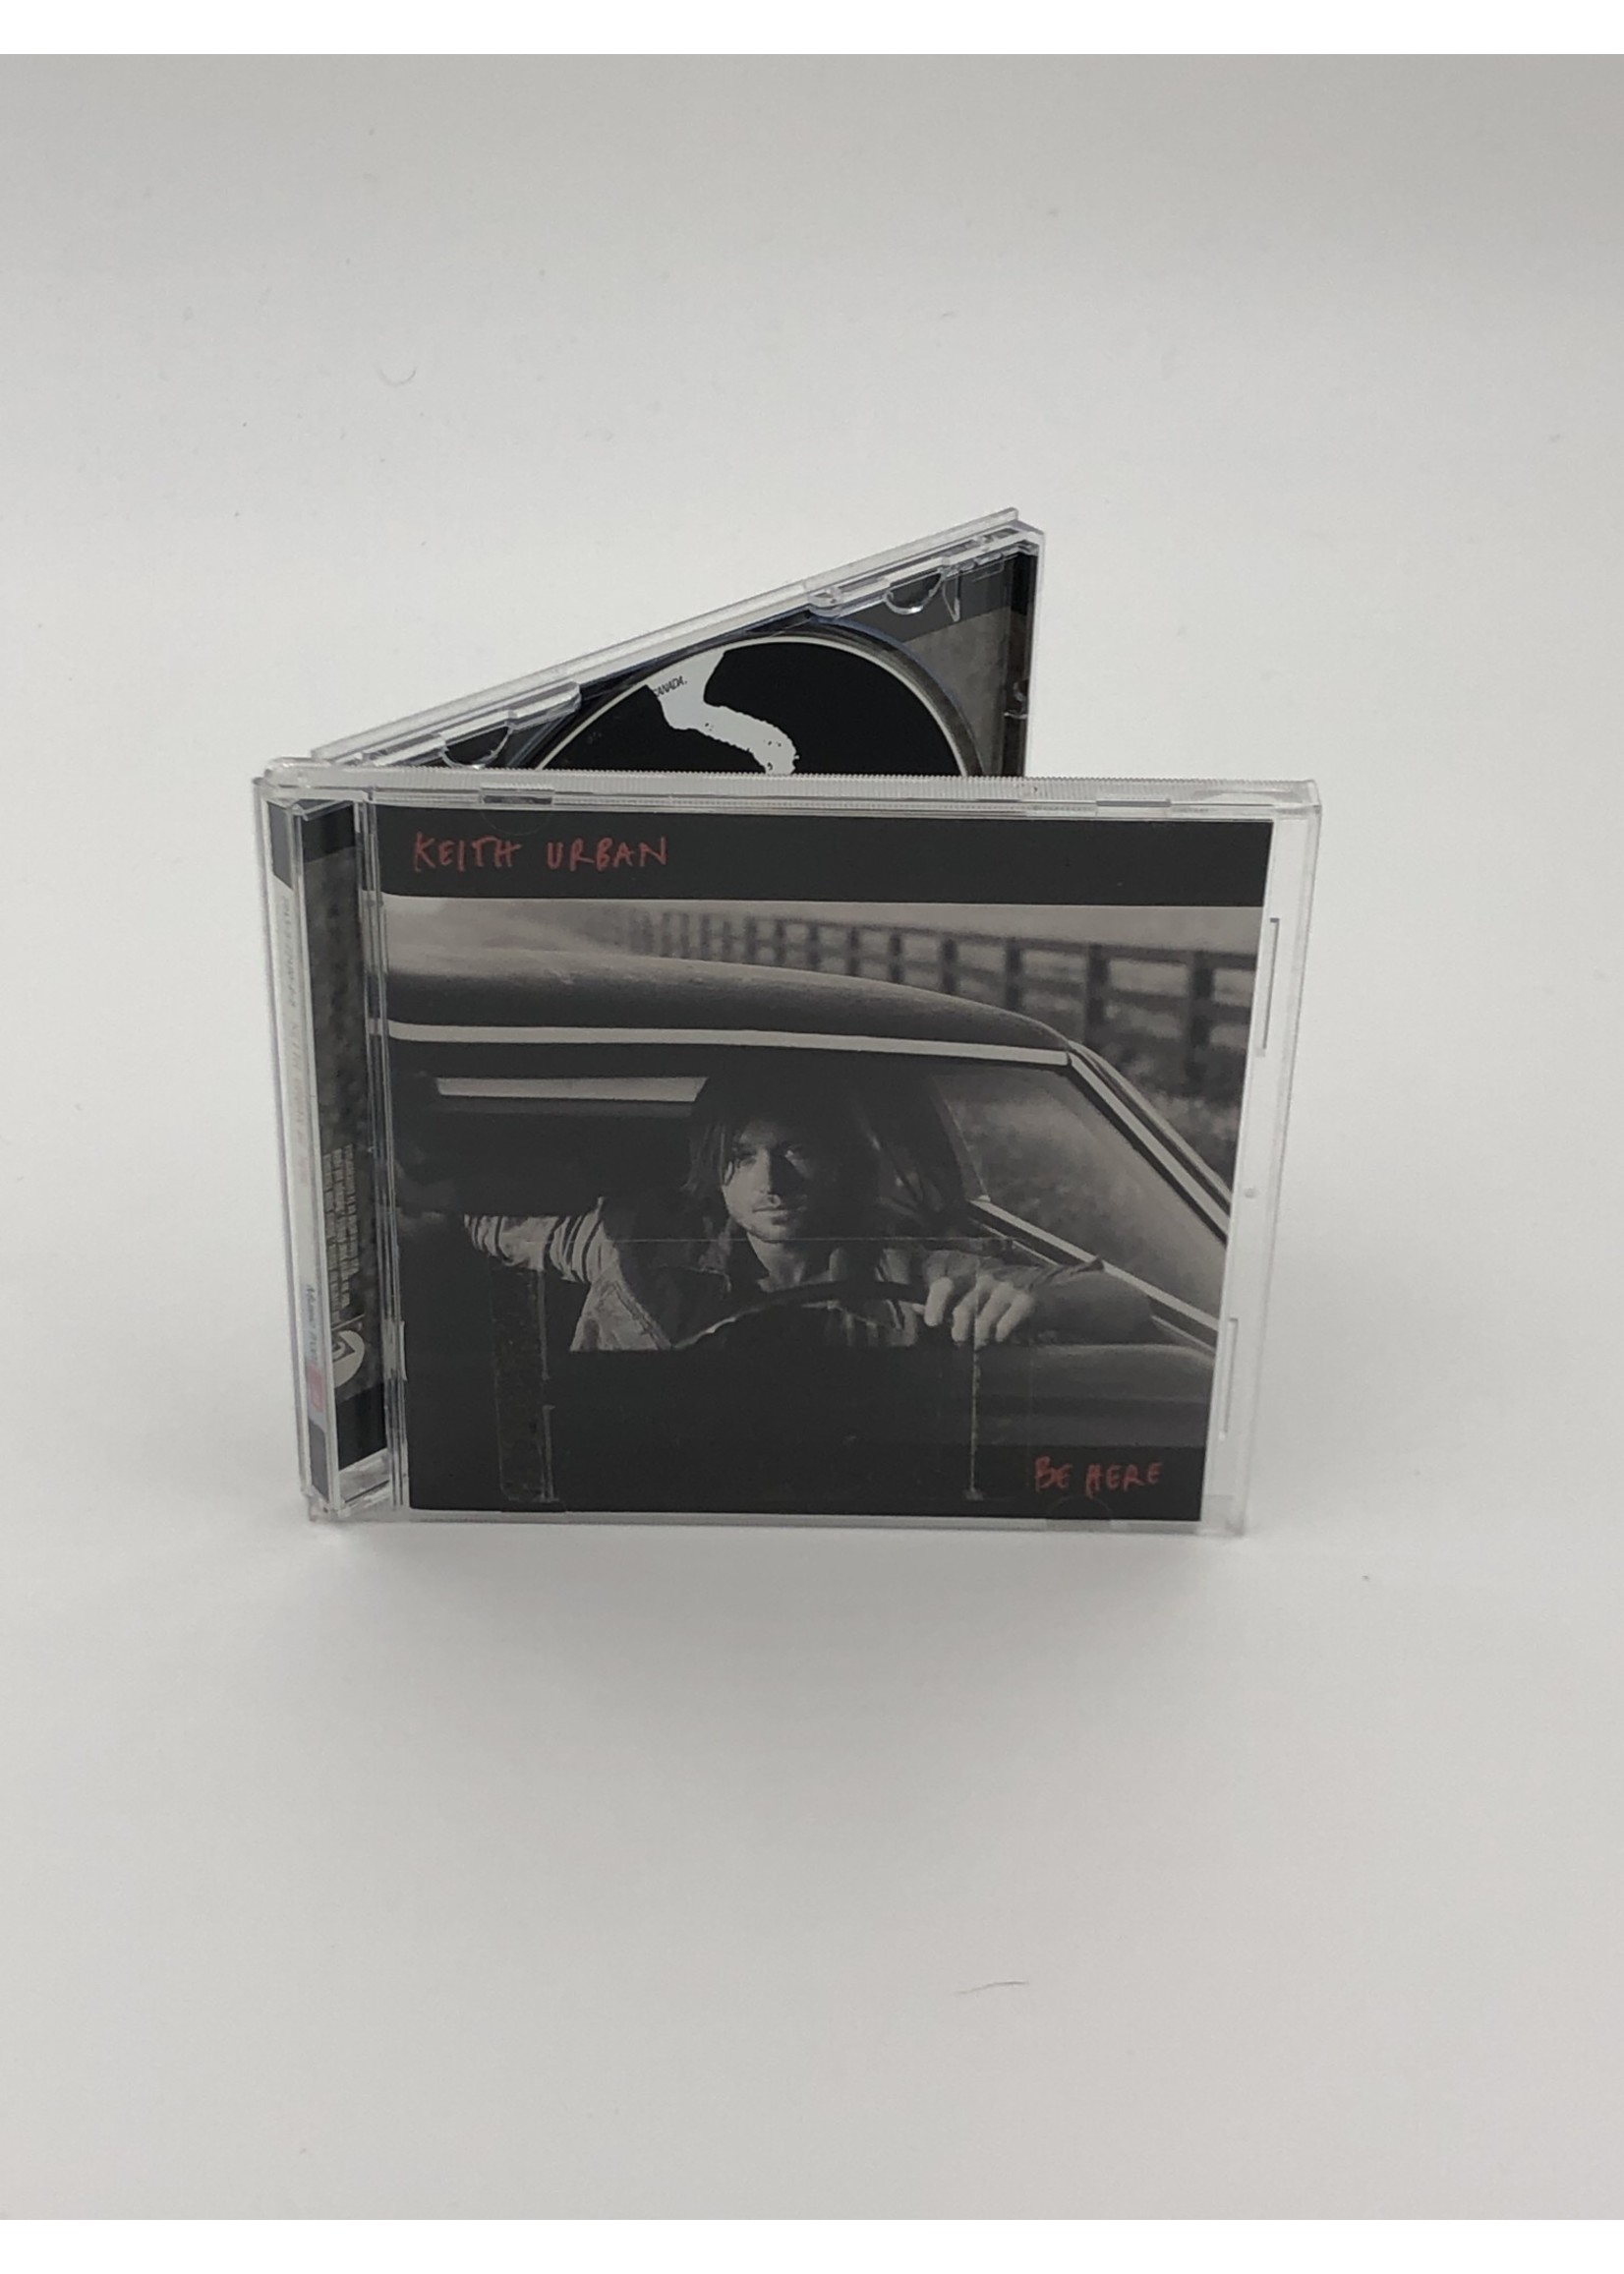 CD Keith Urban: Be here CD